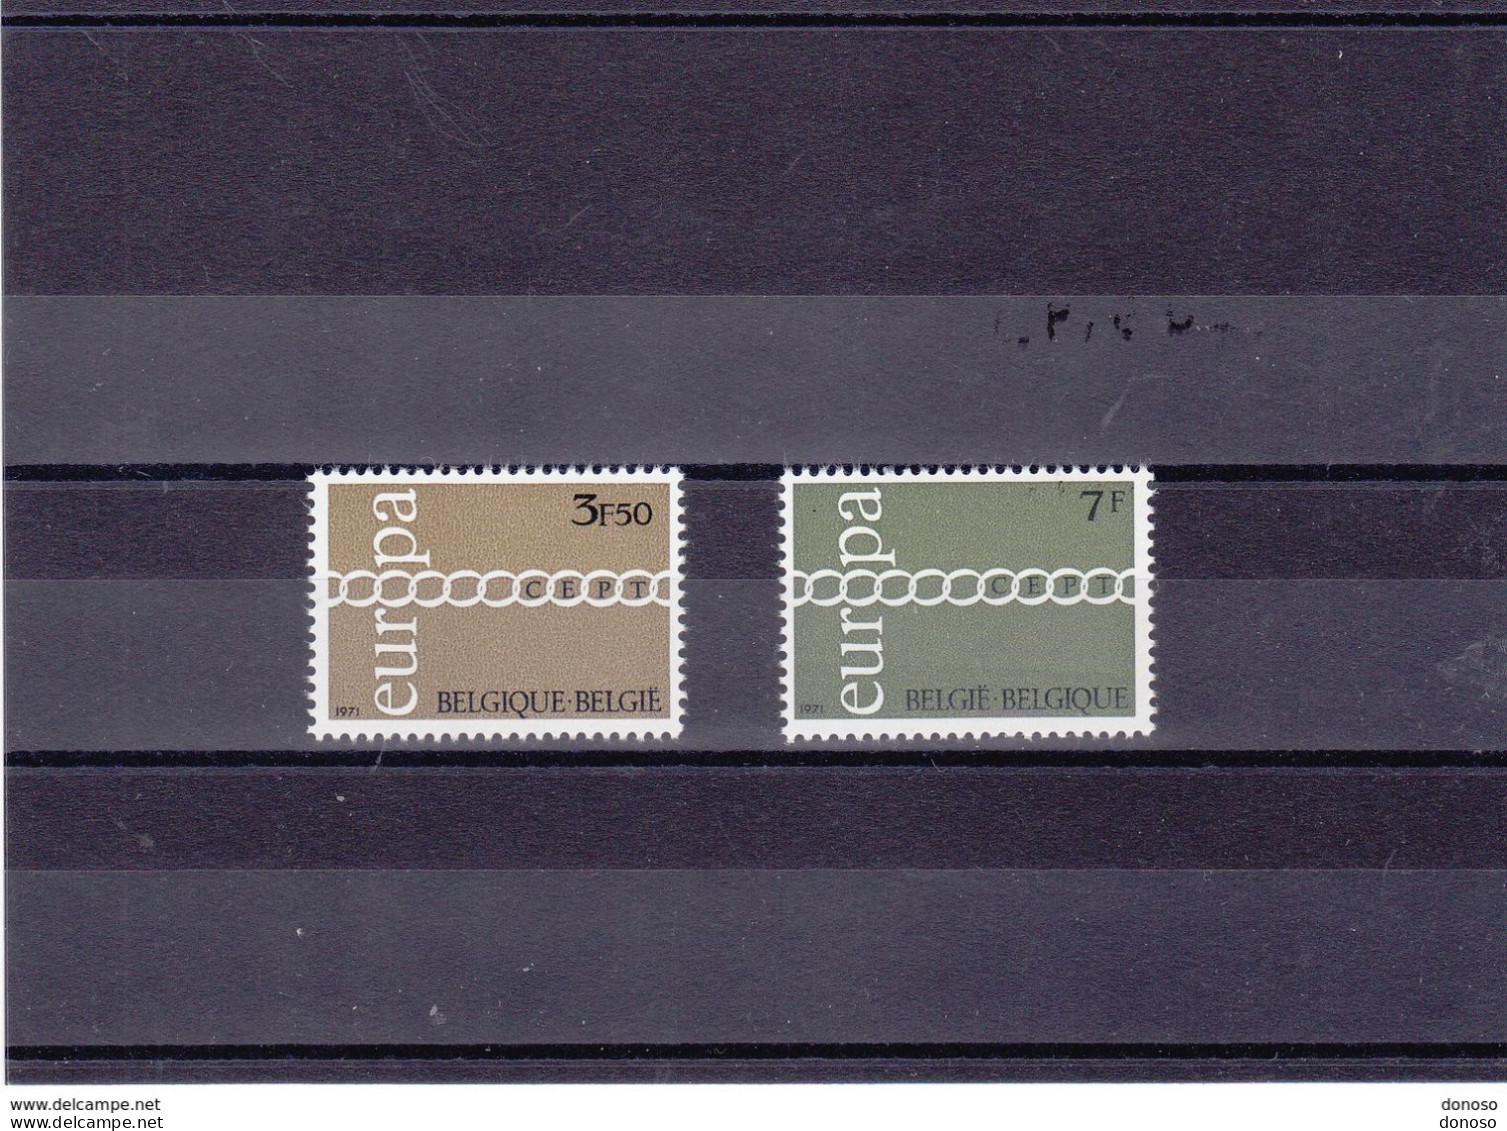 BELGIQUE 1971 EUROPA Yvert 1578-1579, Michel 1633-1634 NEUF** MNH - Unused Stamps